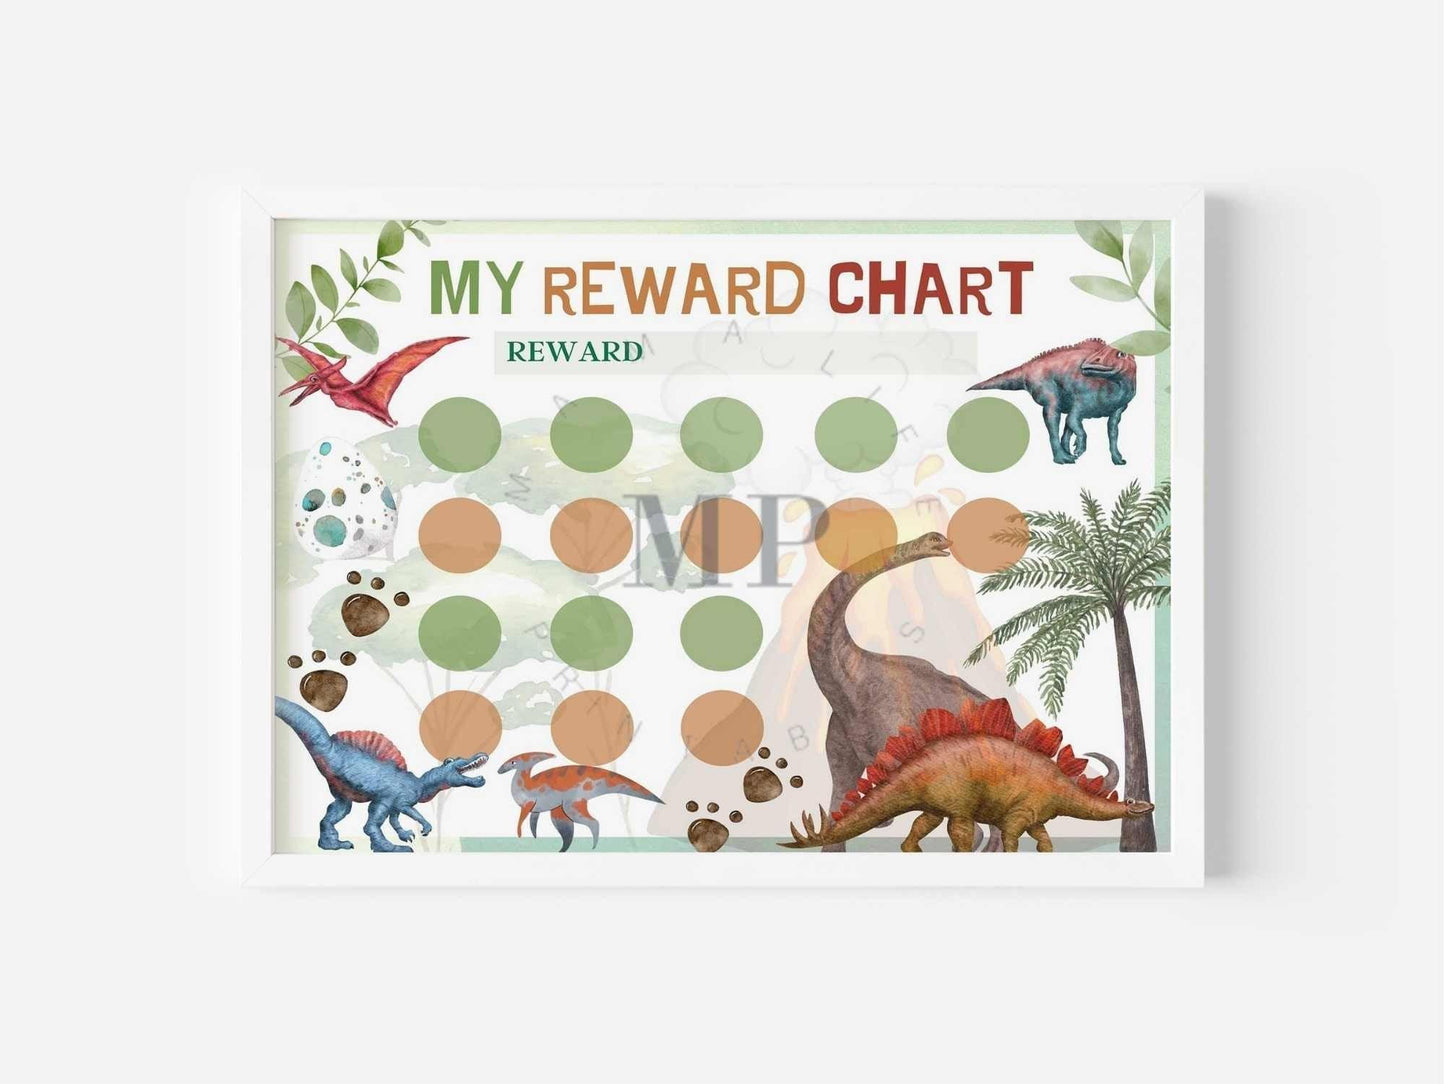 Dinosaur Potty Training Sticker Chart - Kids Reward Chart - Mama Life Printables